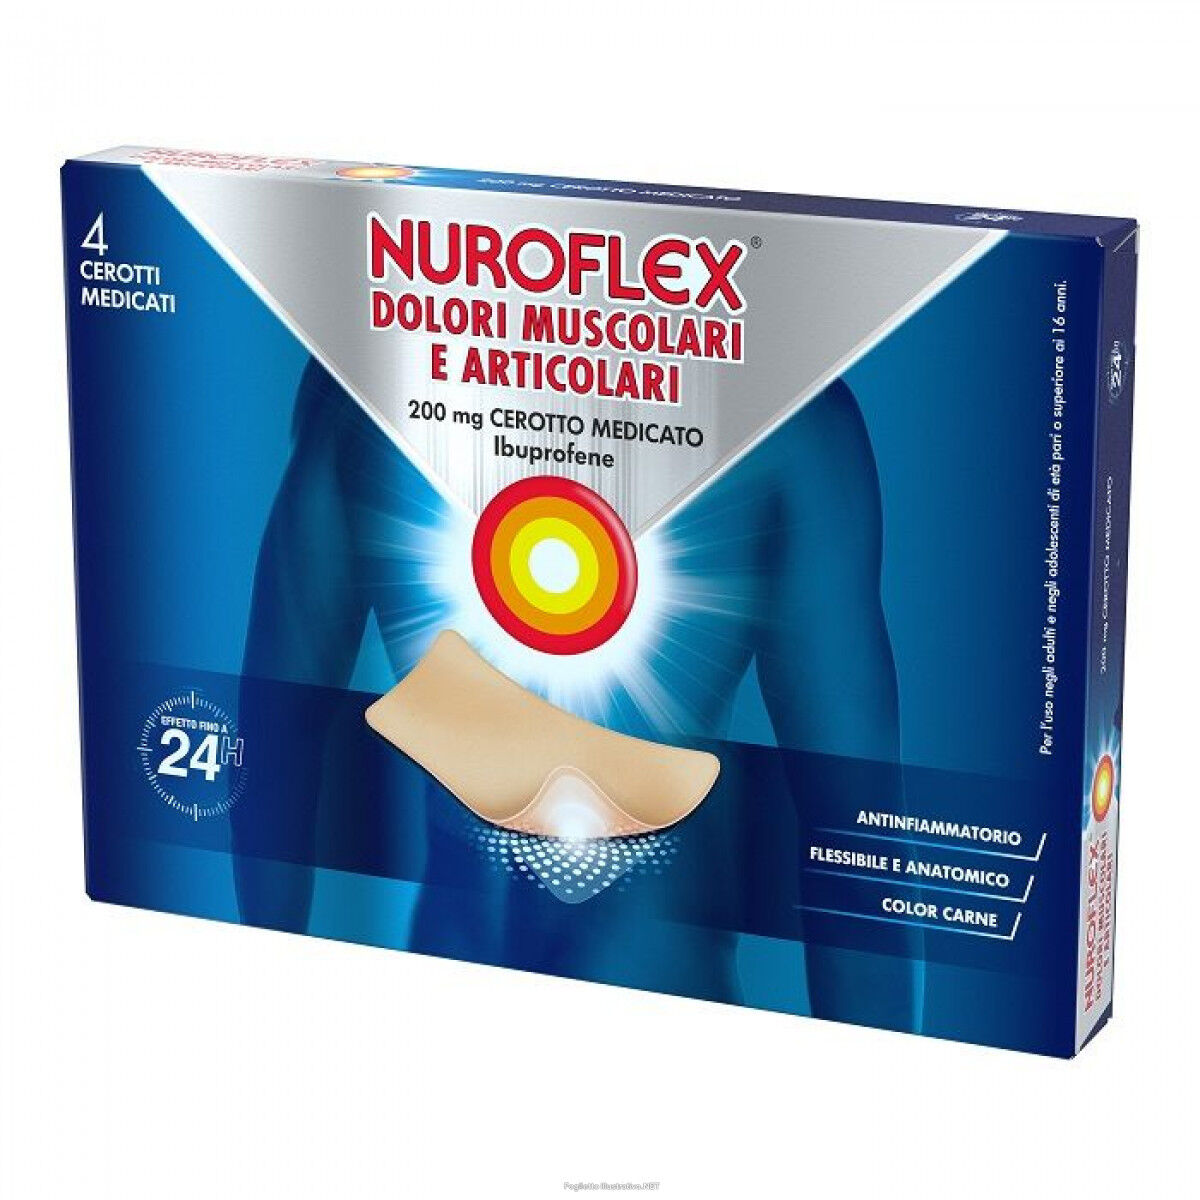 Nuroflex Dolori Musc 4Cer200 mg